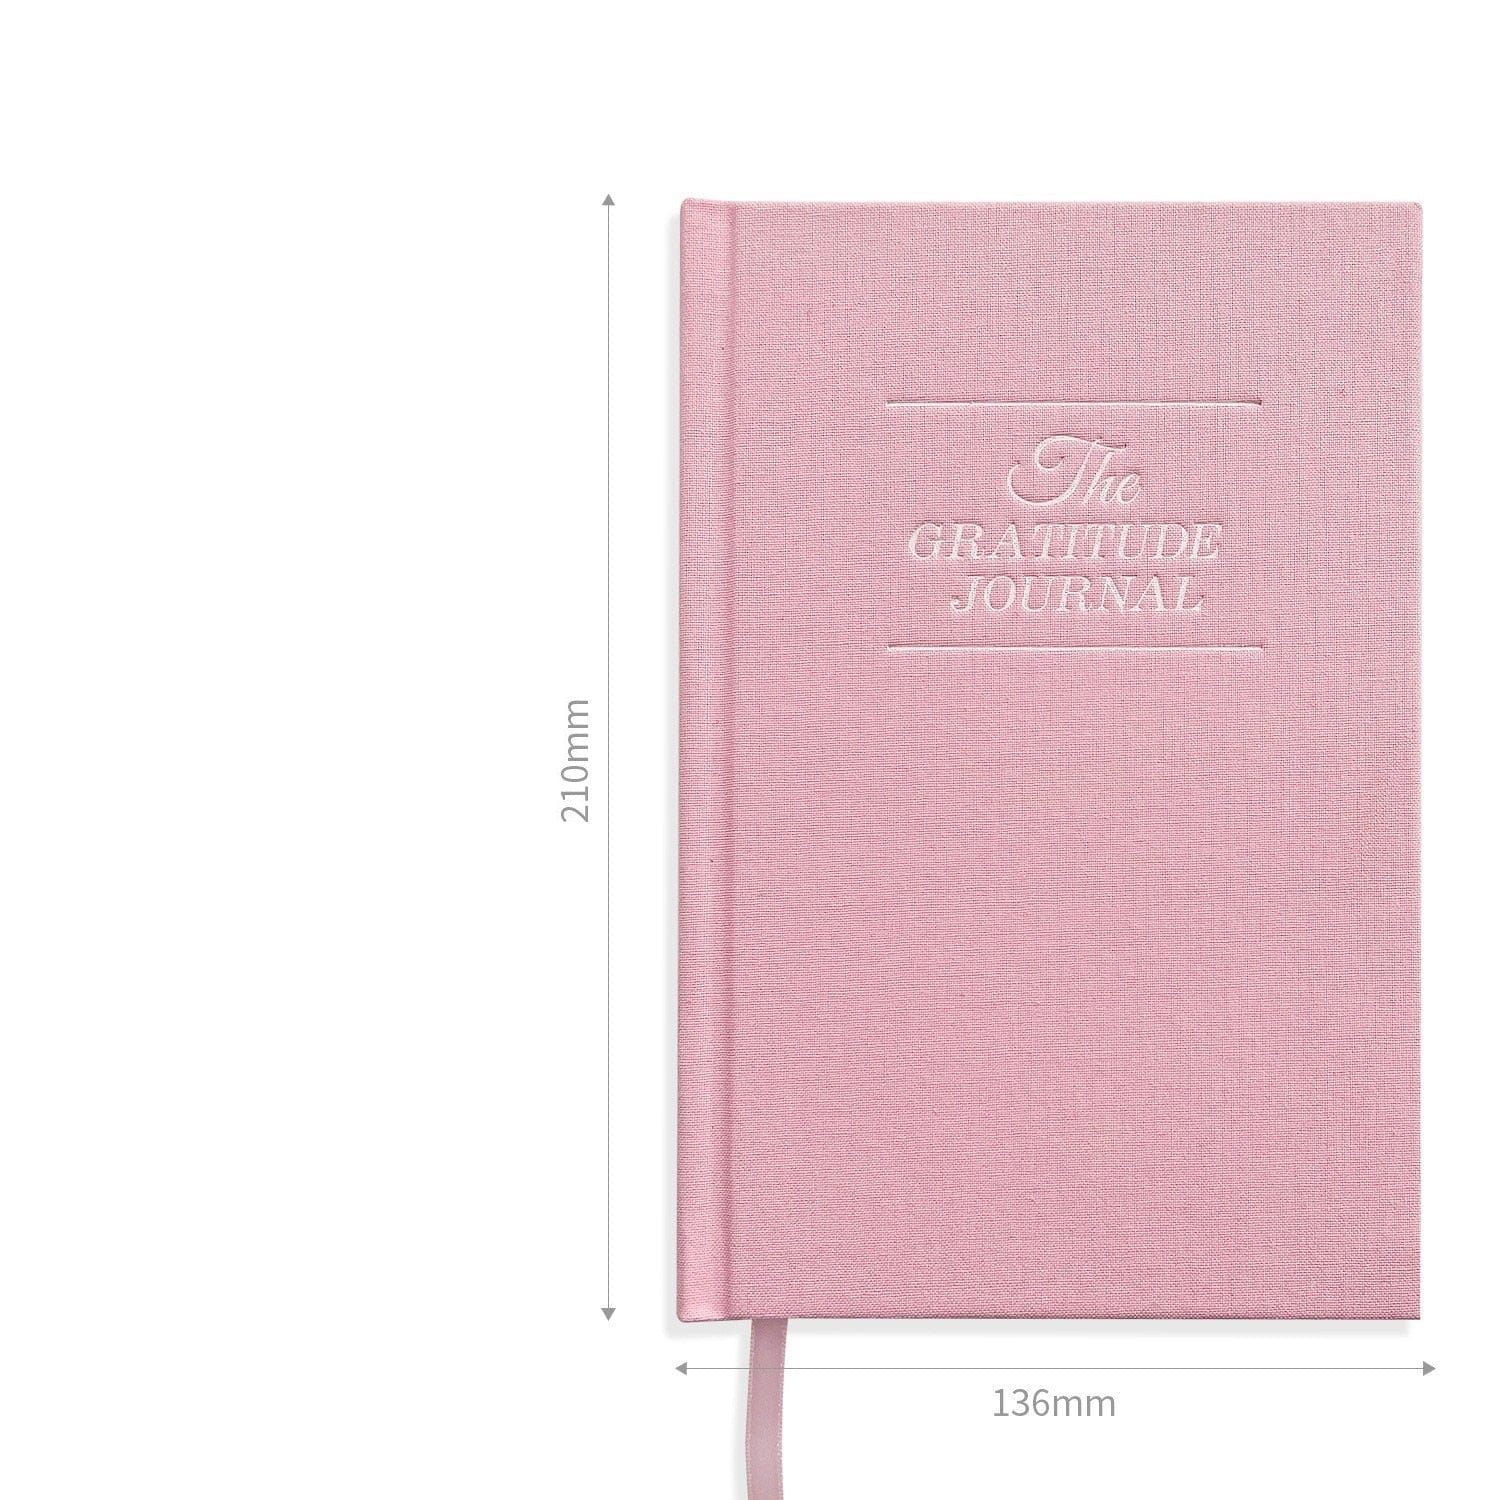 KUMA Stationery & Crafts  Pink The Gratitude Journal